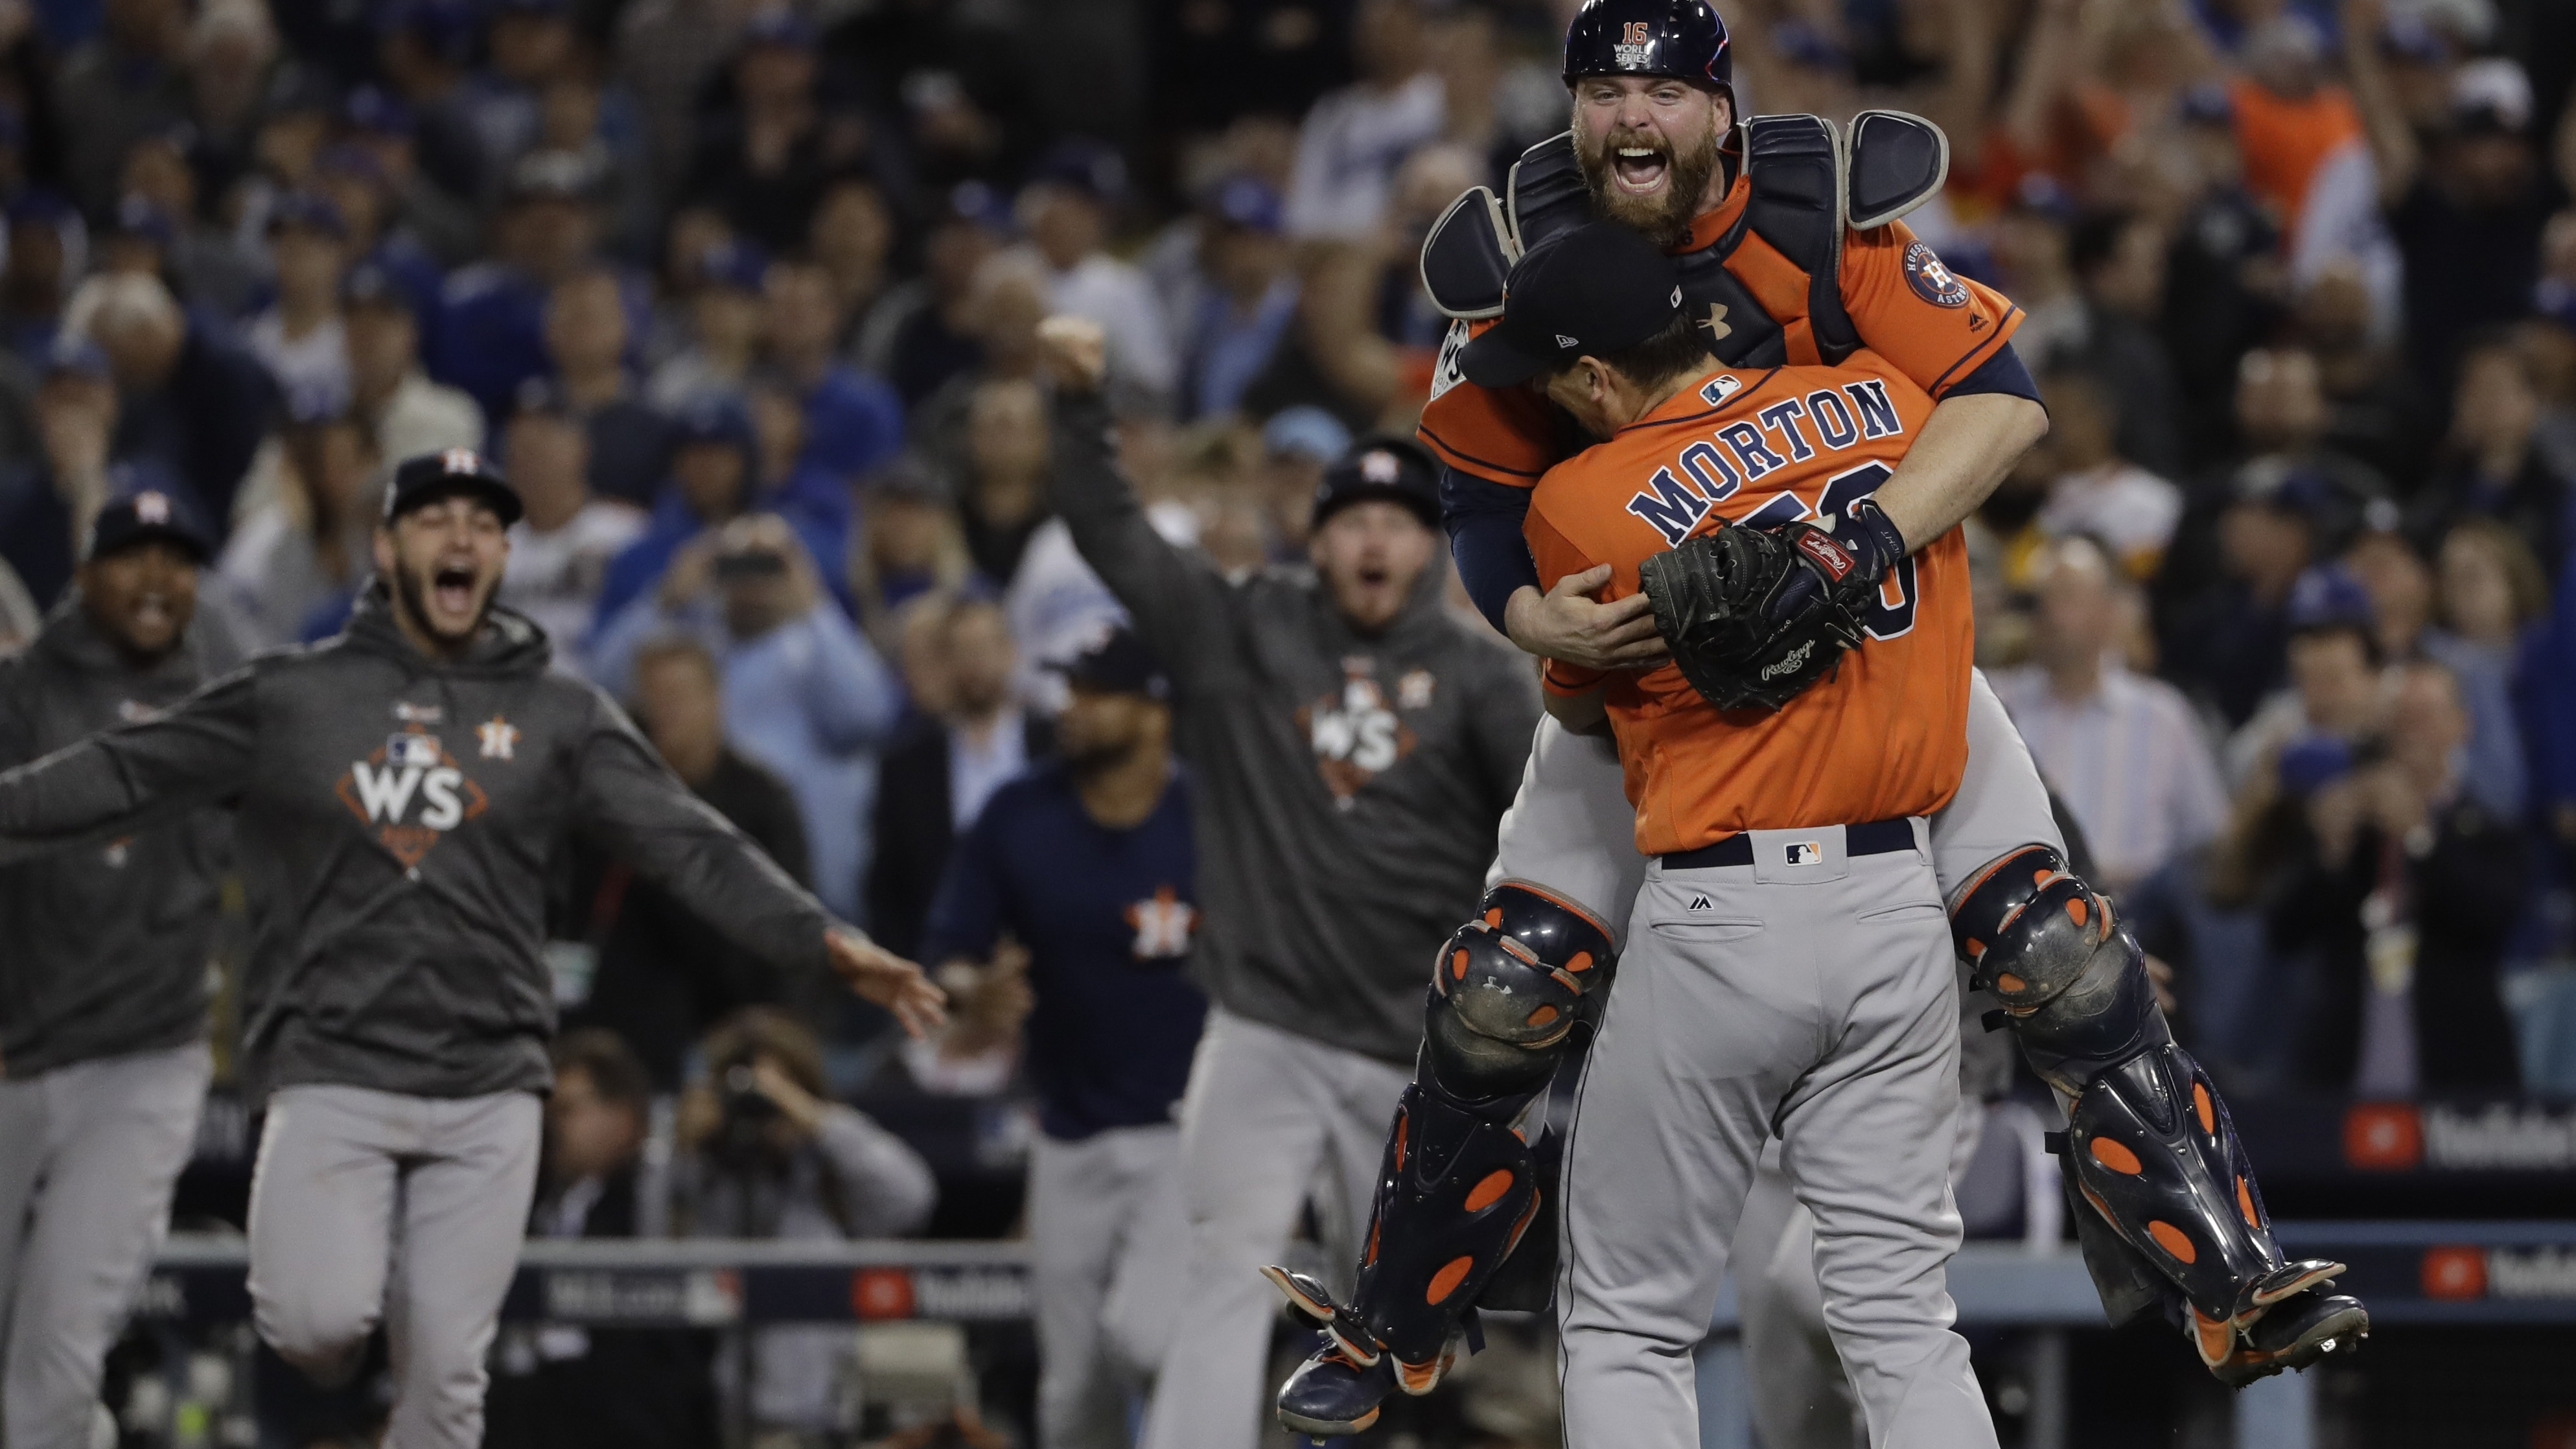 MLB bungled the Astros Affair. Big shock there